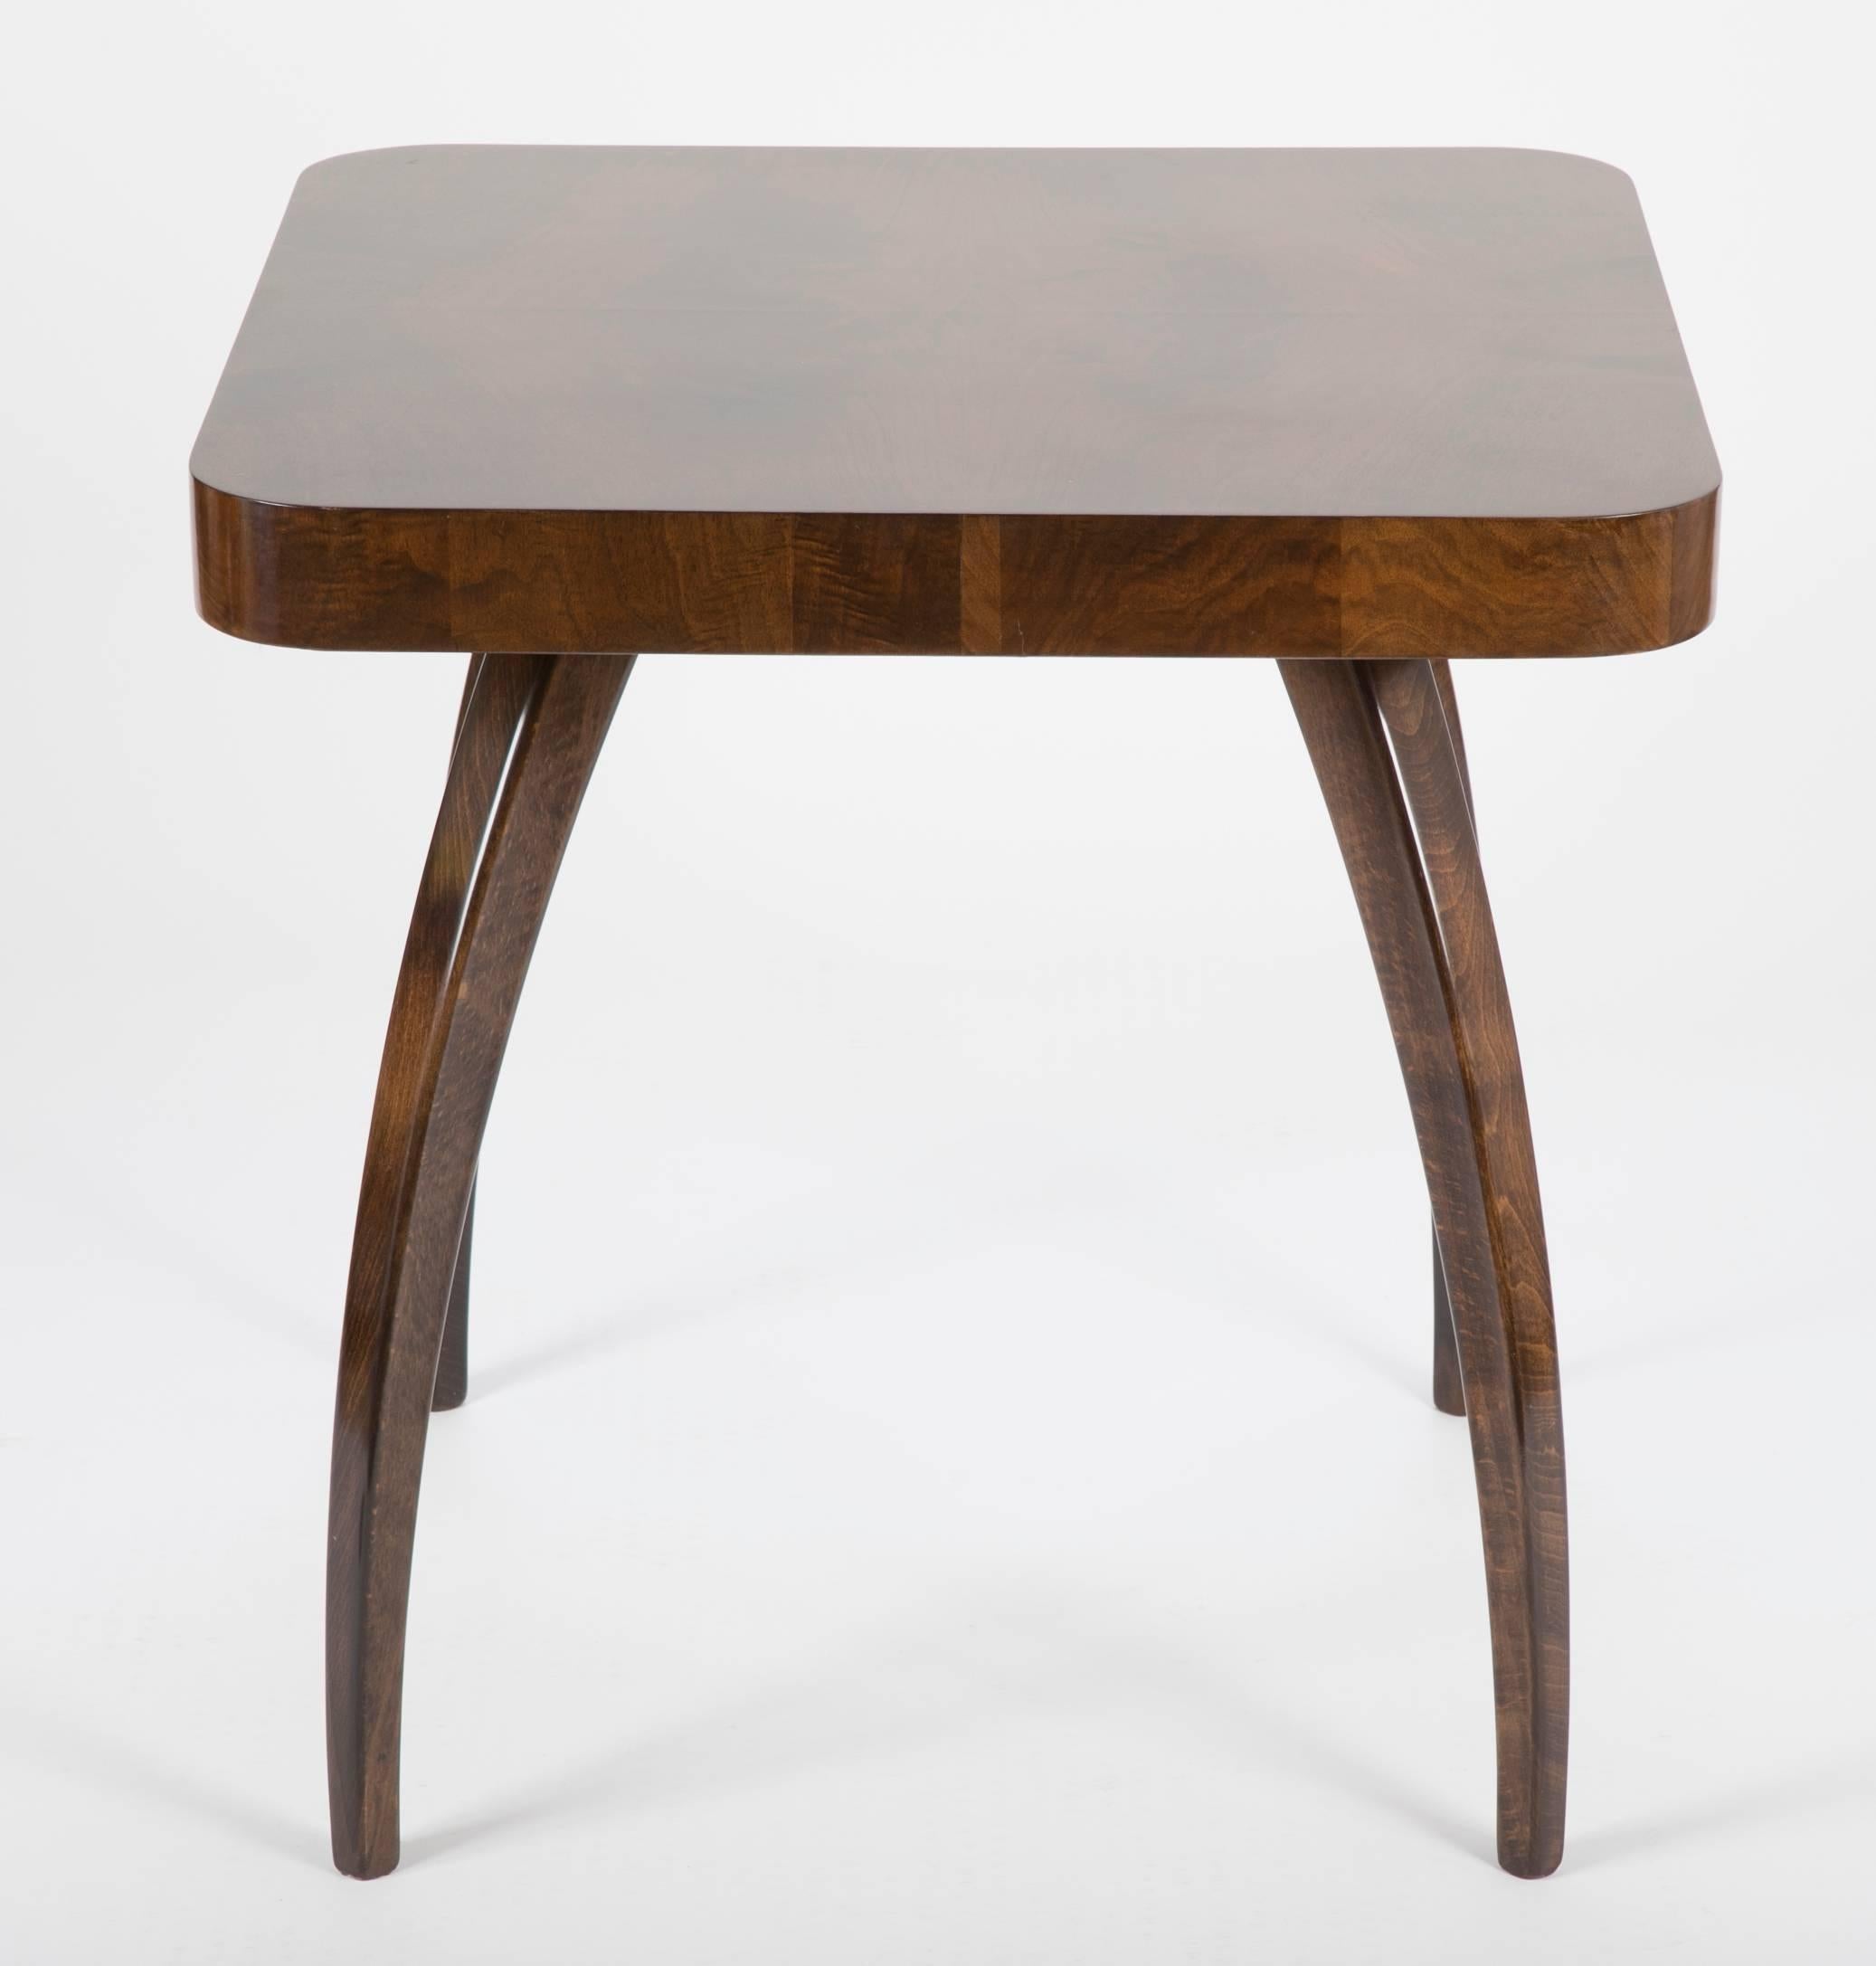 A walnut end table designed by Jindrich Halabala, produced by Zavody Brno, Czech Republic, circa 1930s.